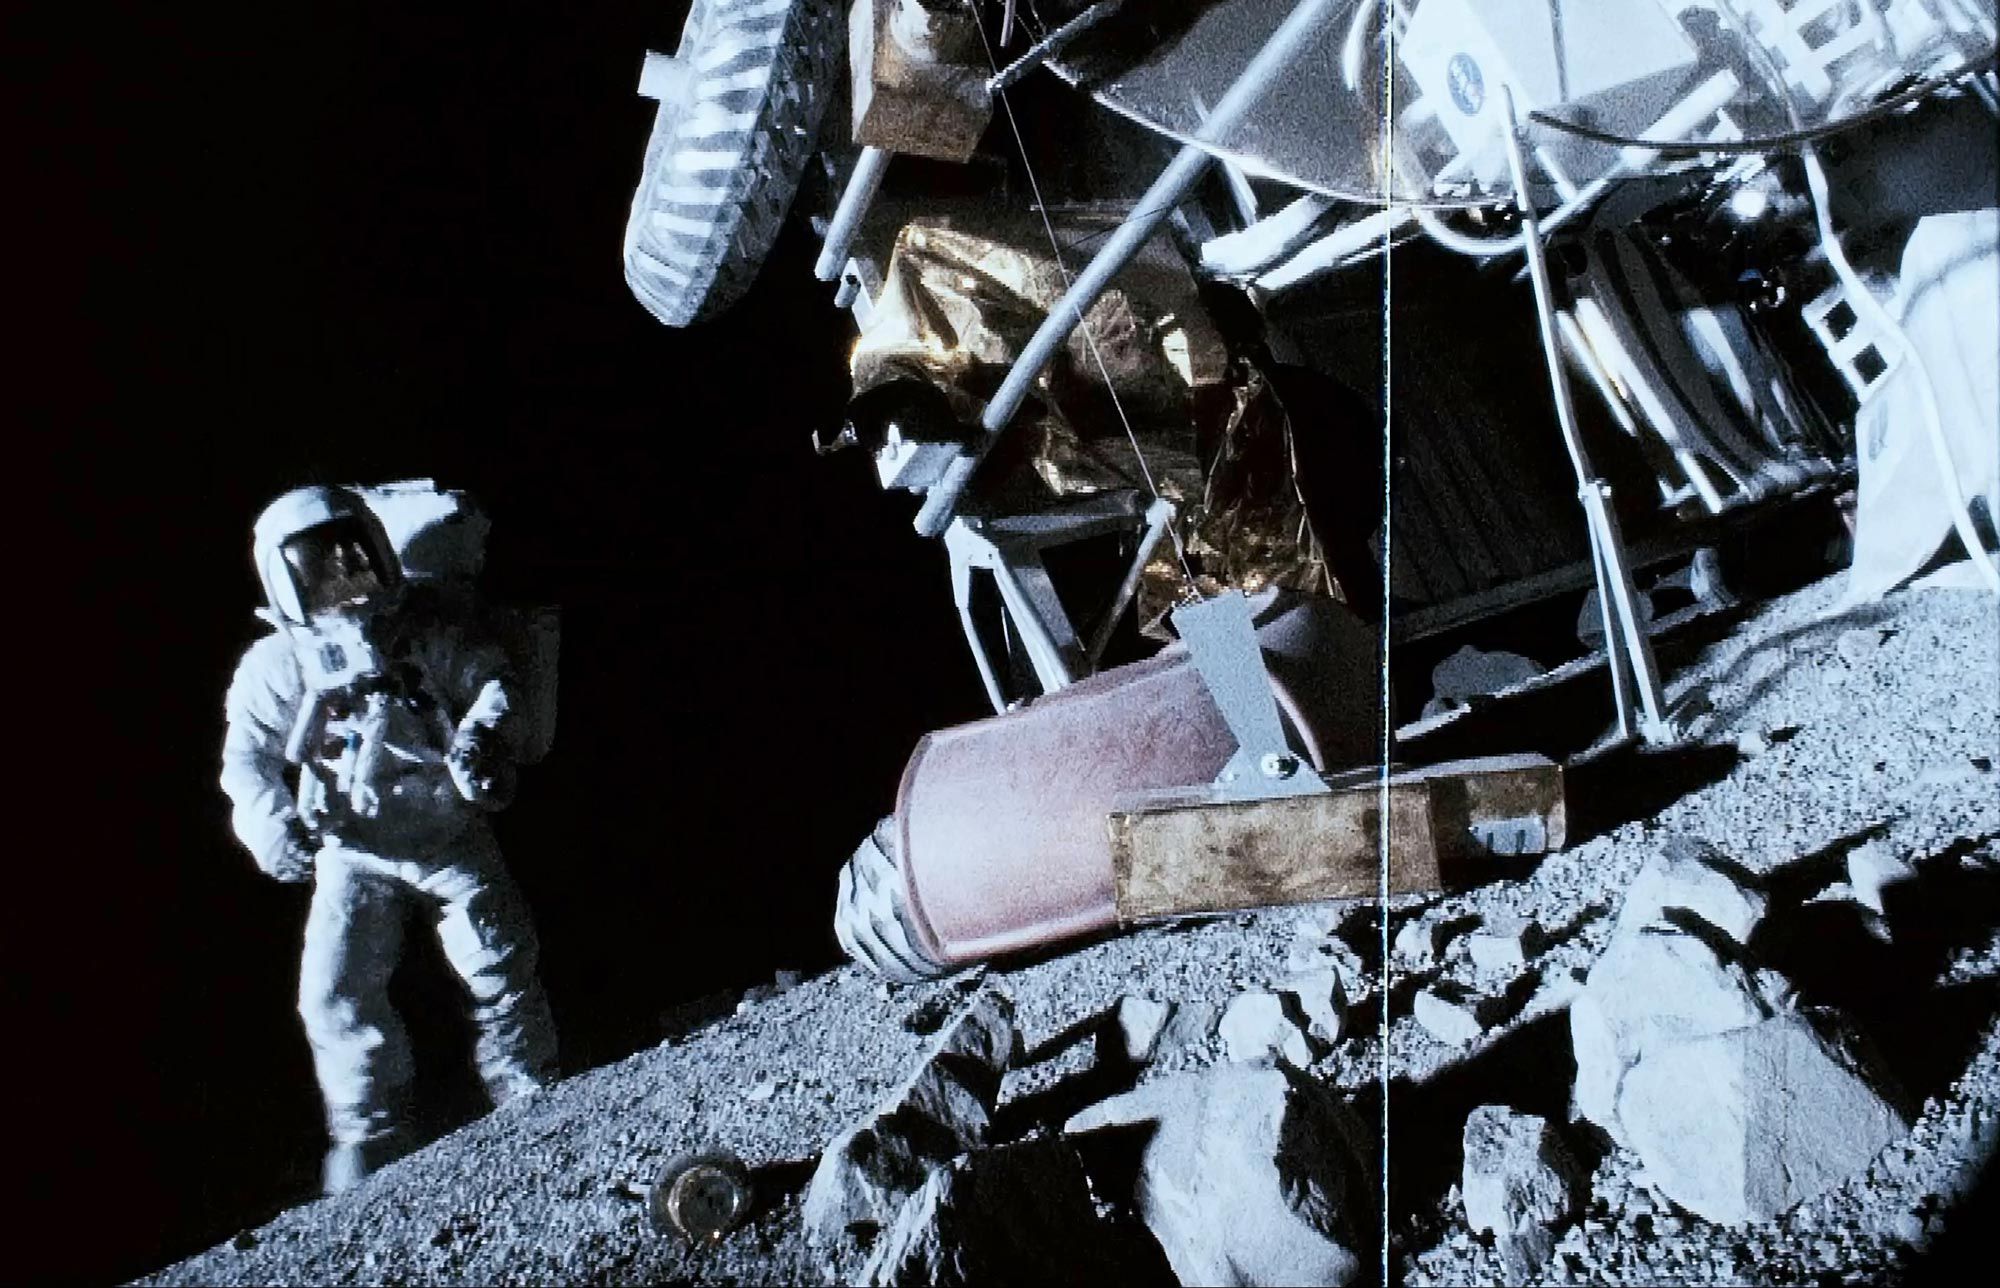 NASA mission crew encounter something alien on The Moon in Apollo 18 (2011